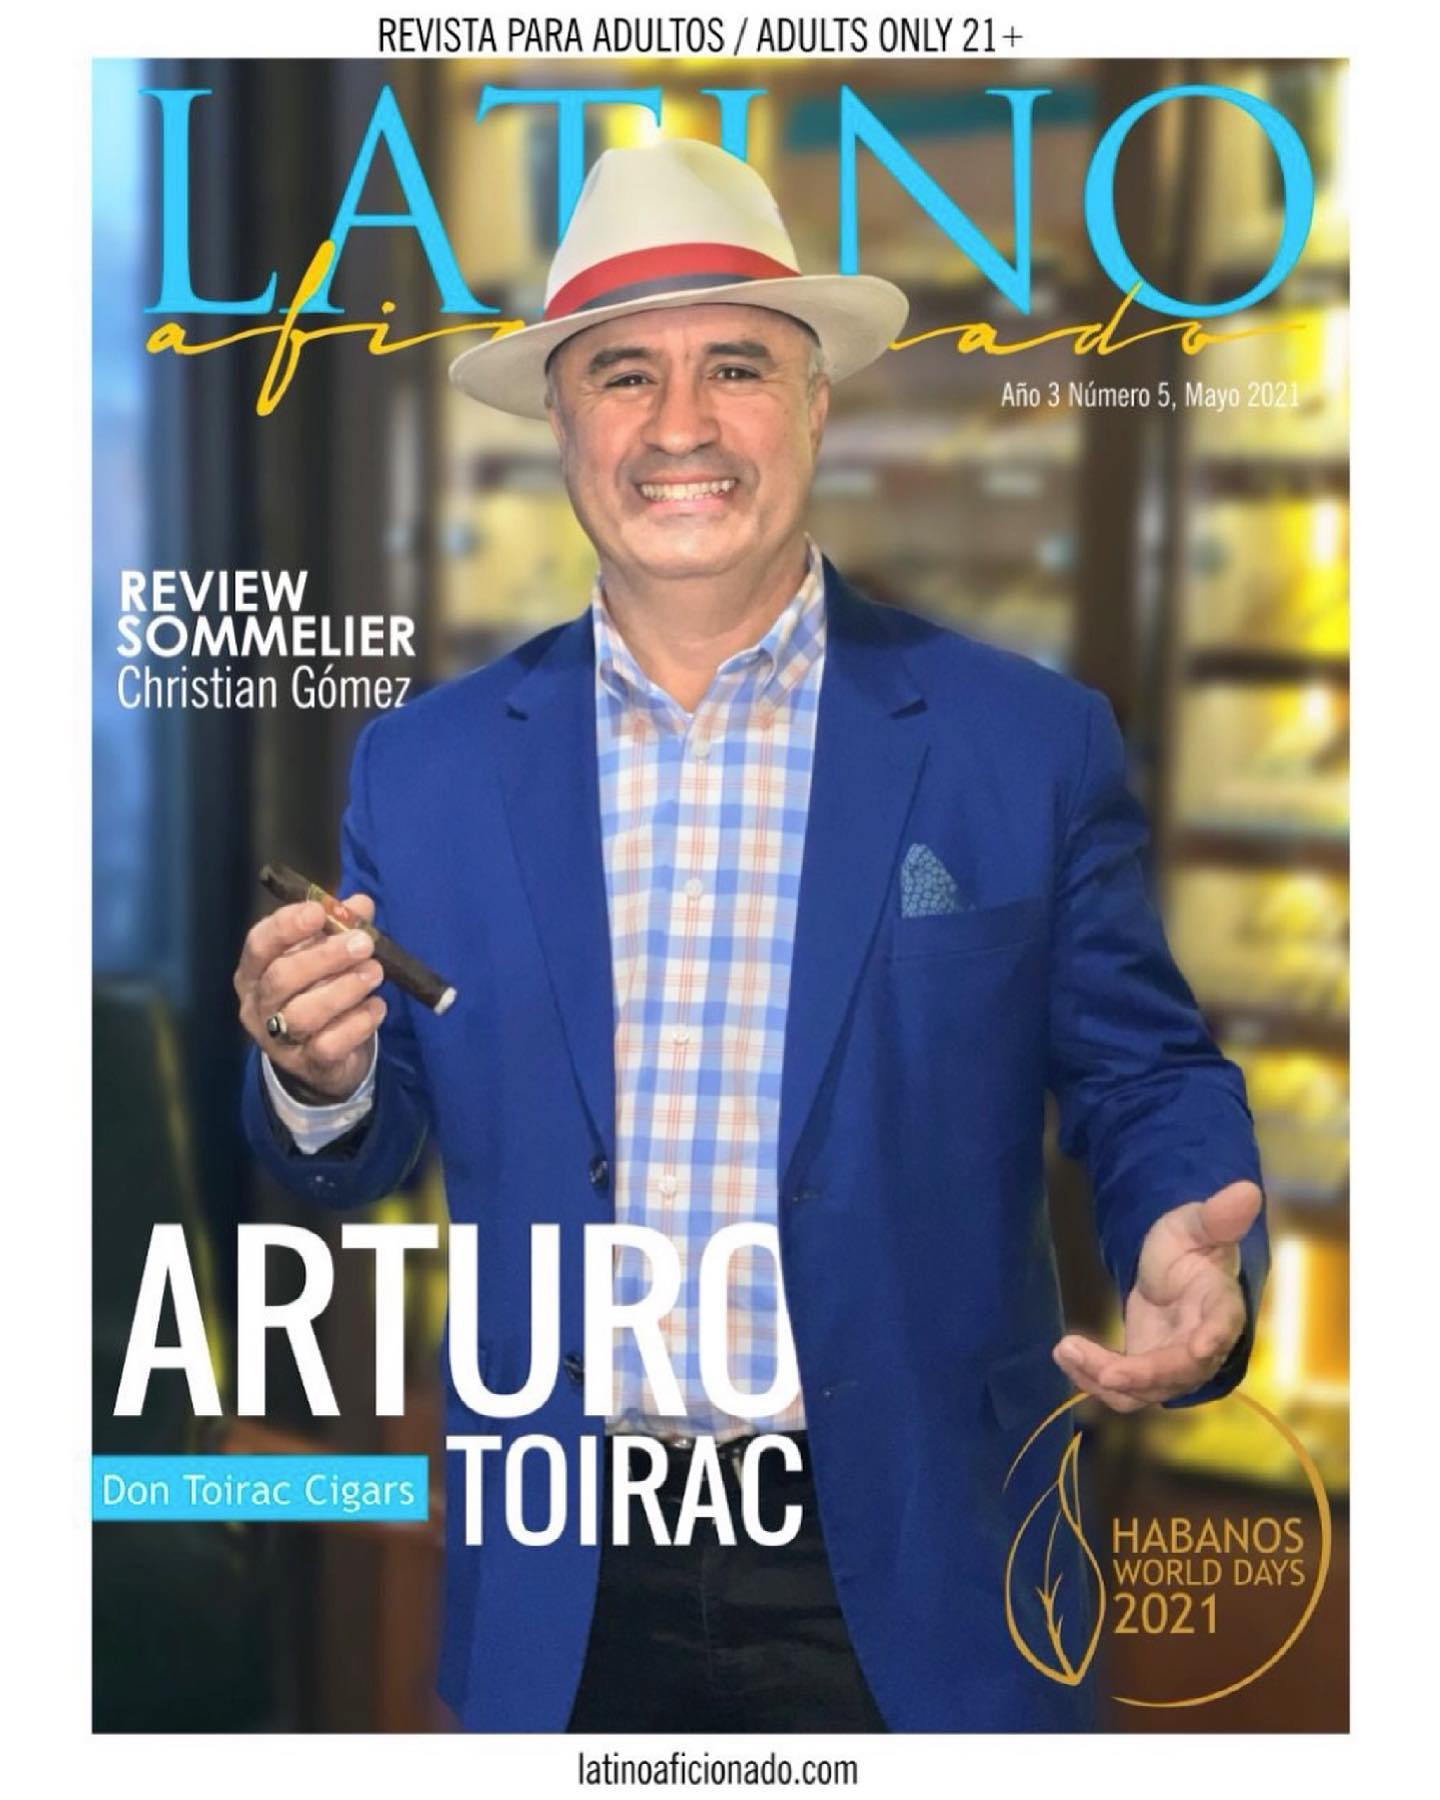 Acabou de sair a nova edição da revista “Latino Aficionado”, e desta vez, traz na capa Arturo Toirac, da Don Toirac Cigars